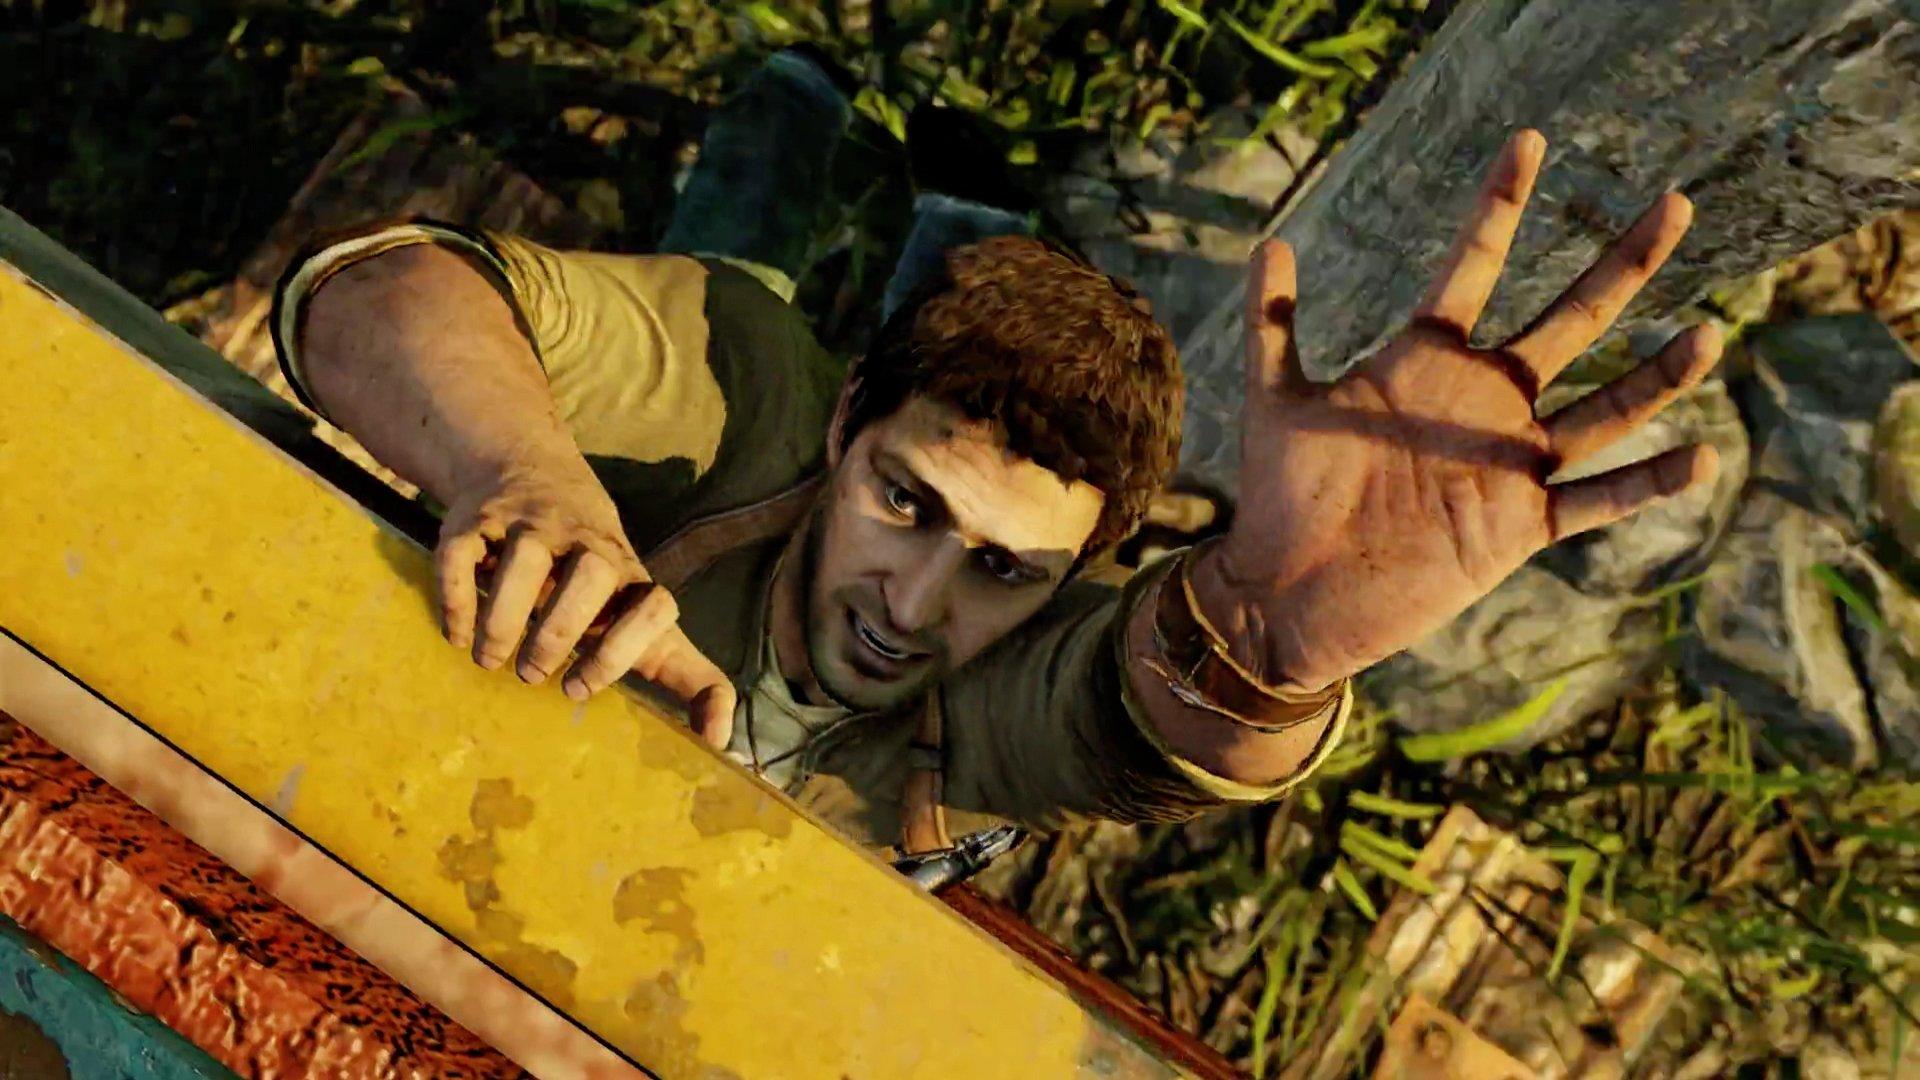 Naughty Dog  PS4 Uncharted: The Nathan Drake Collection 